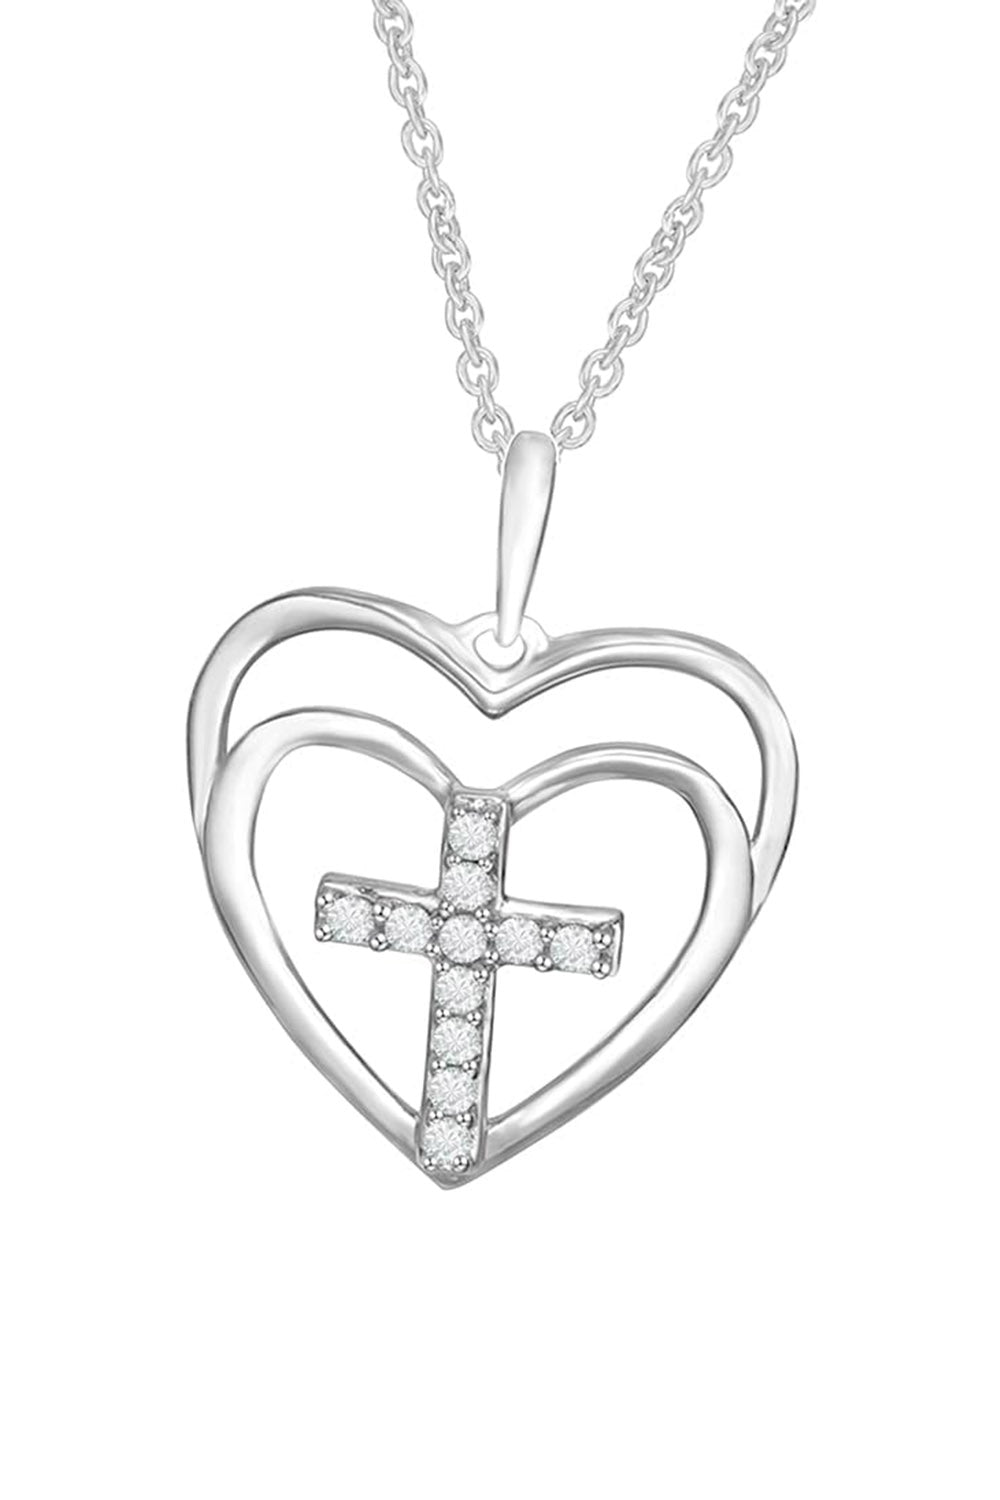 White Gold Color Cross Double Heart Love Pendant Necklace